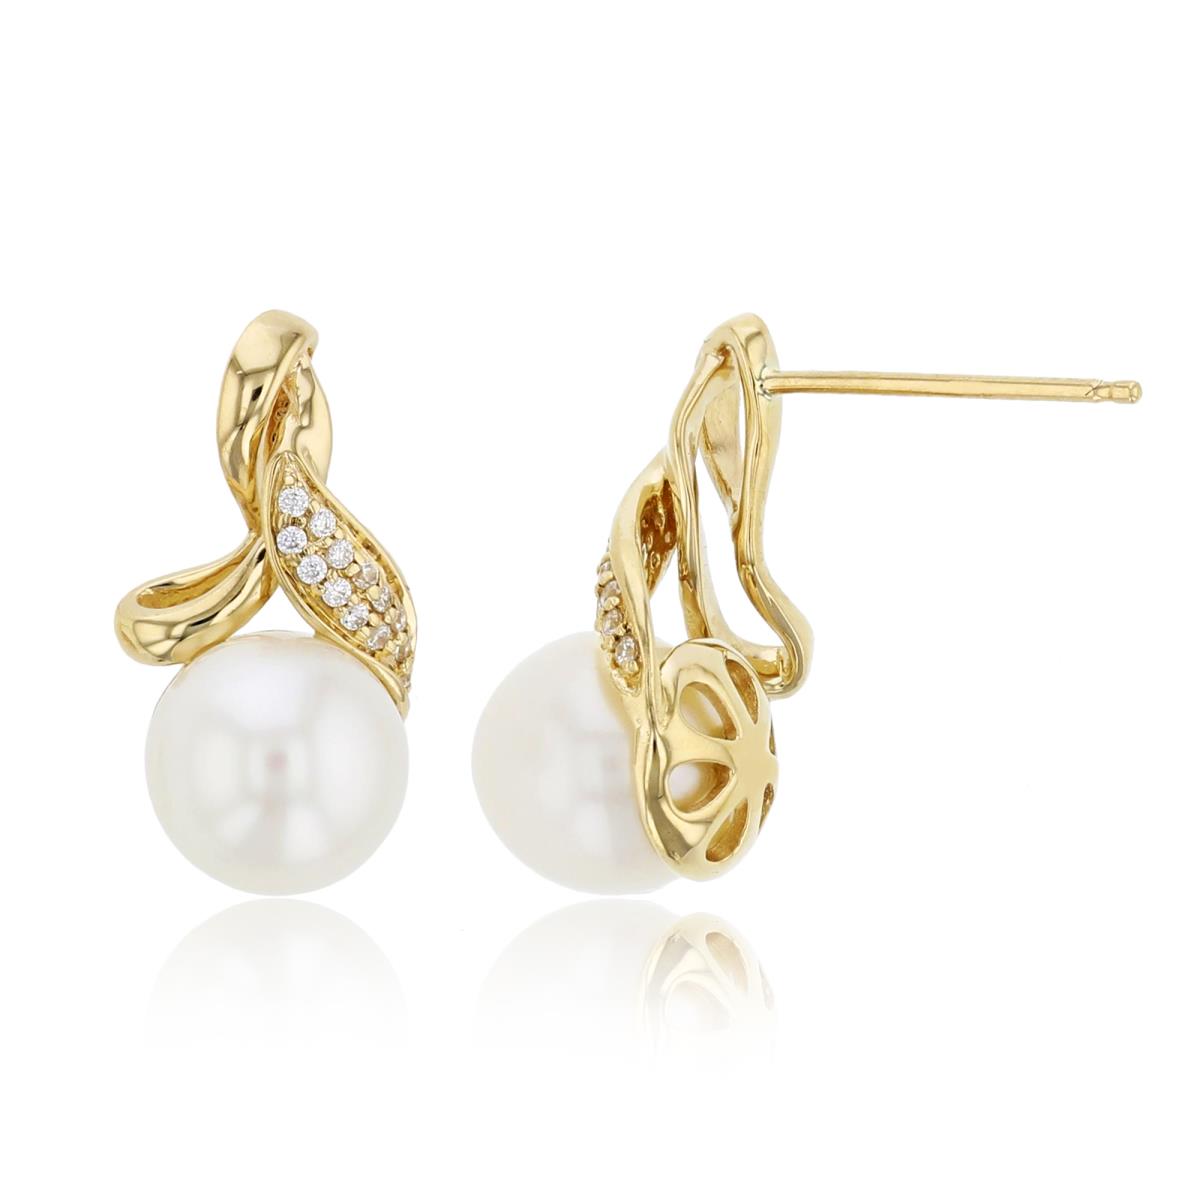 10K Yellow Gold 0.05 CTTW Rnd Diamonds & 7mm Rnd White Pearl  Earring